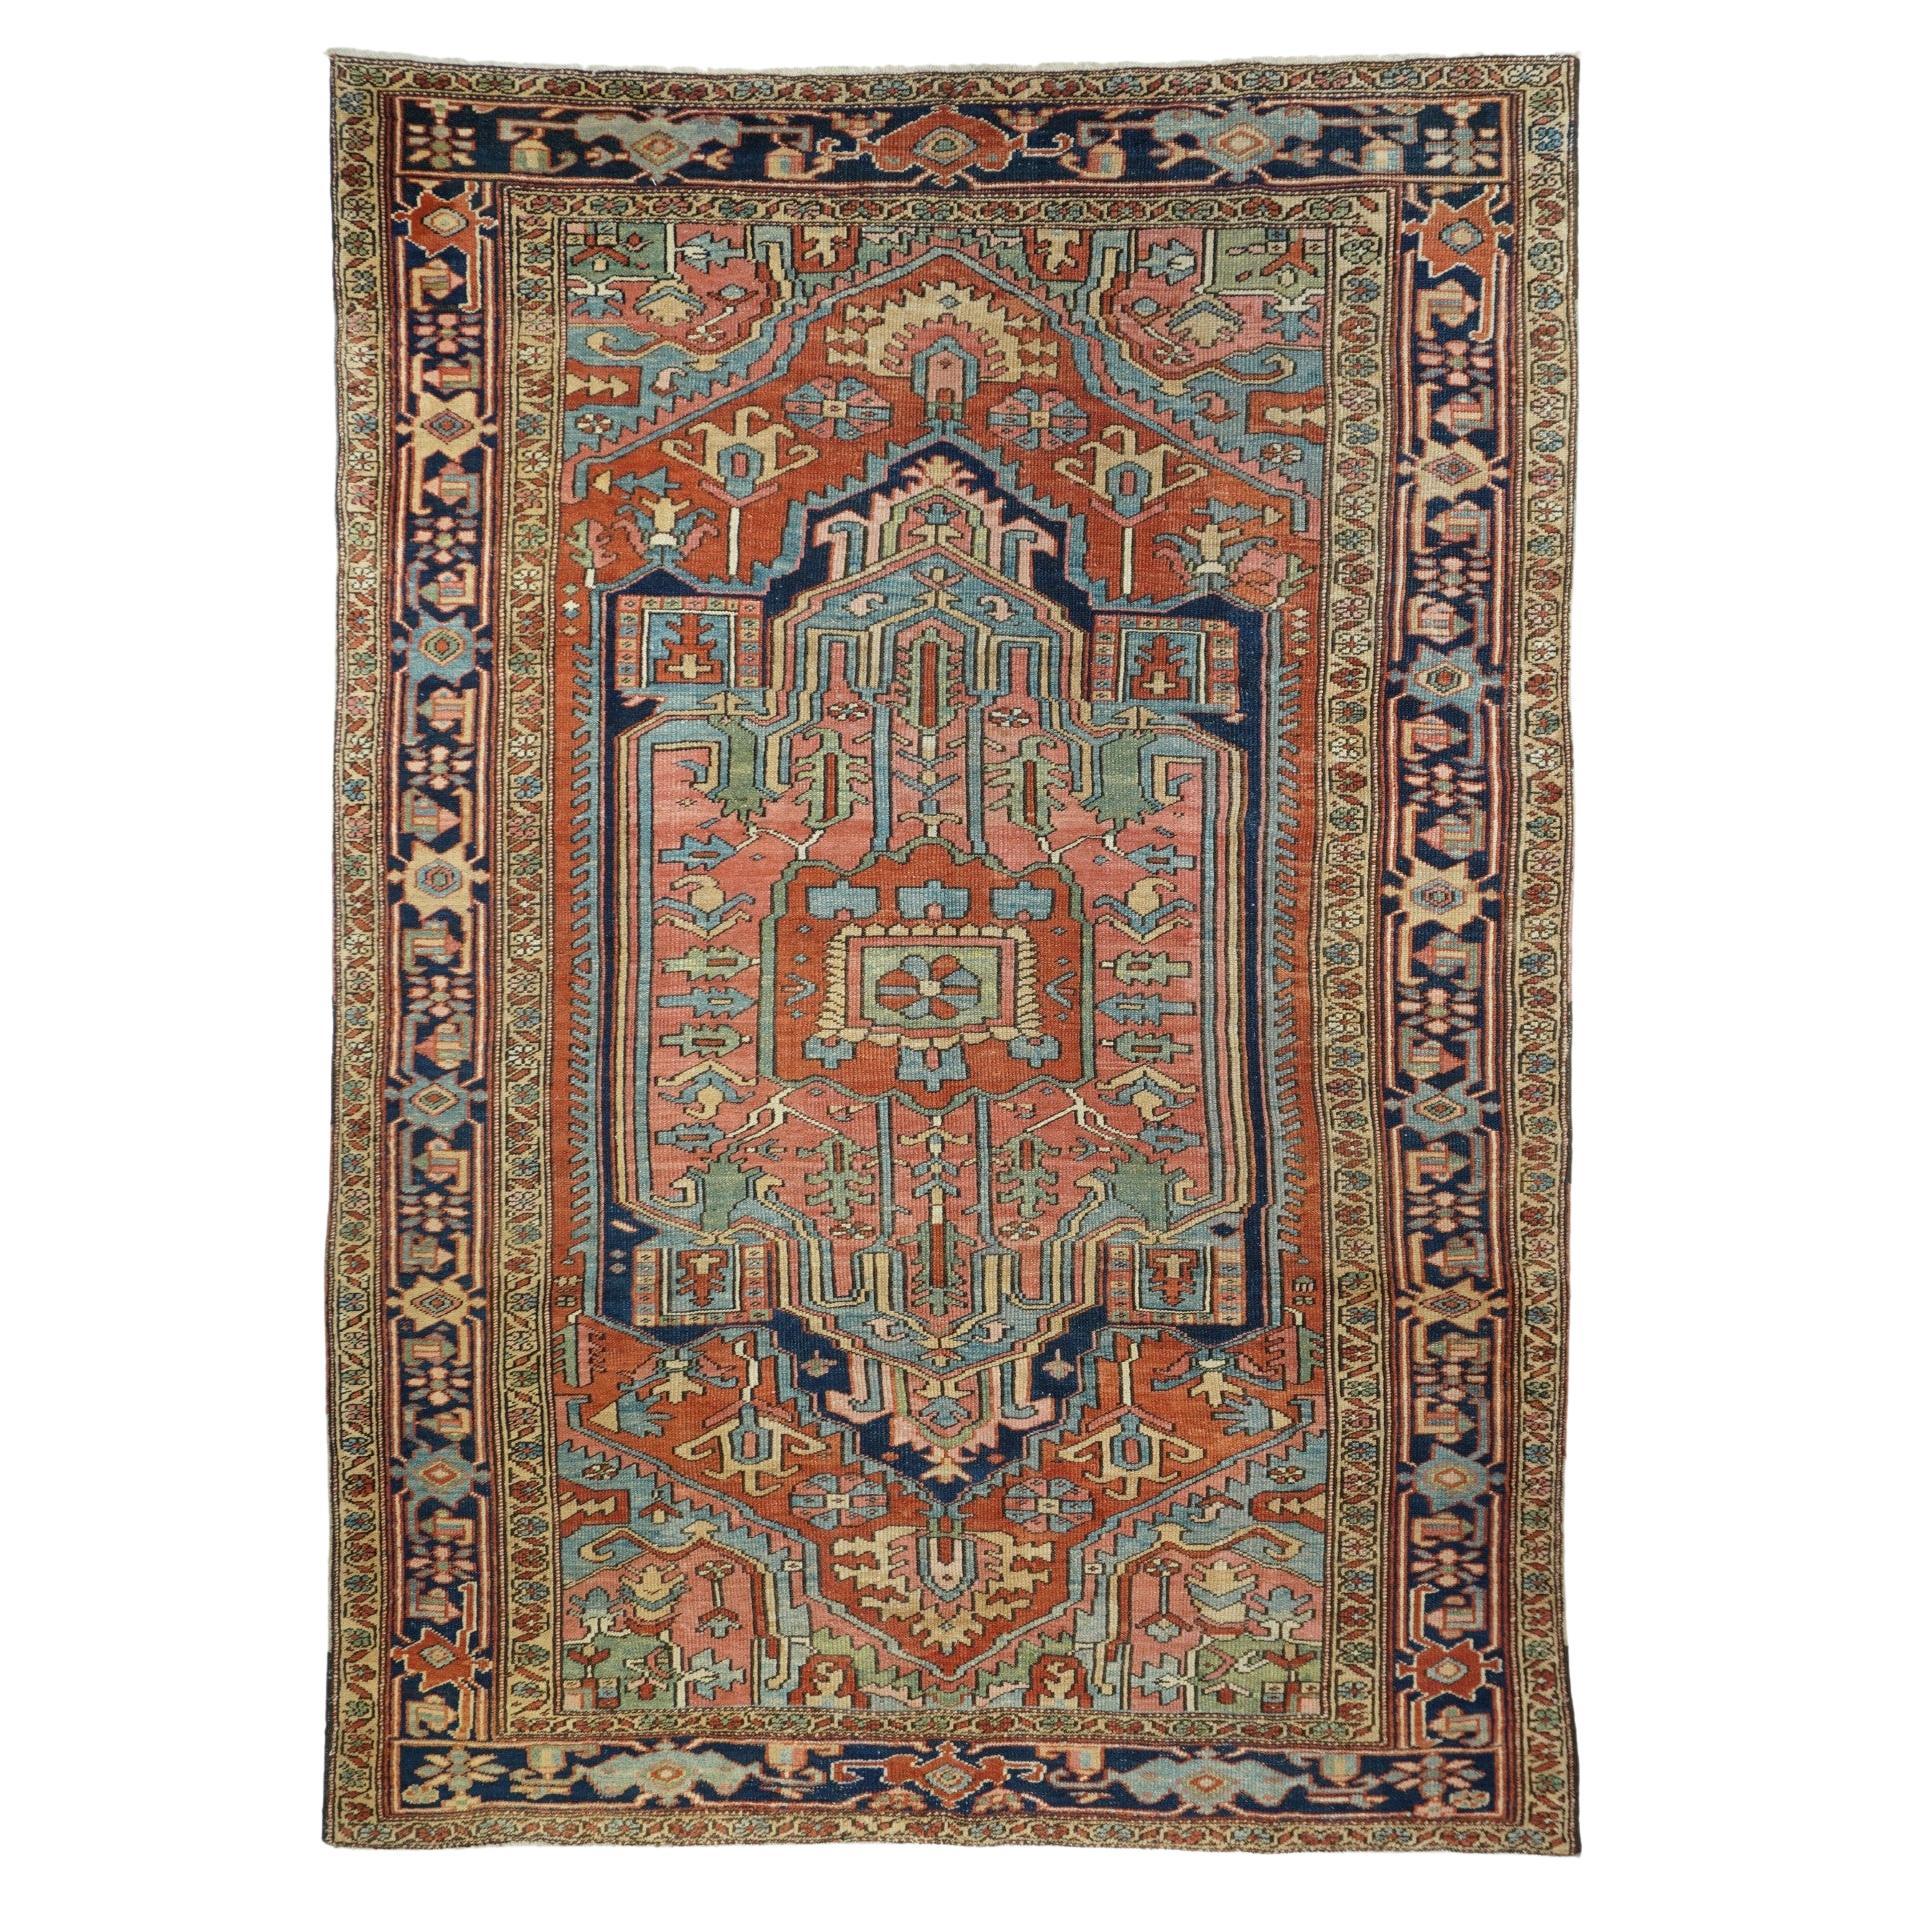 How can I spot a real Sarouk rug?